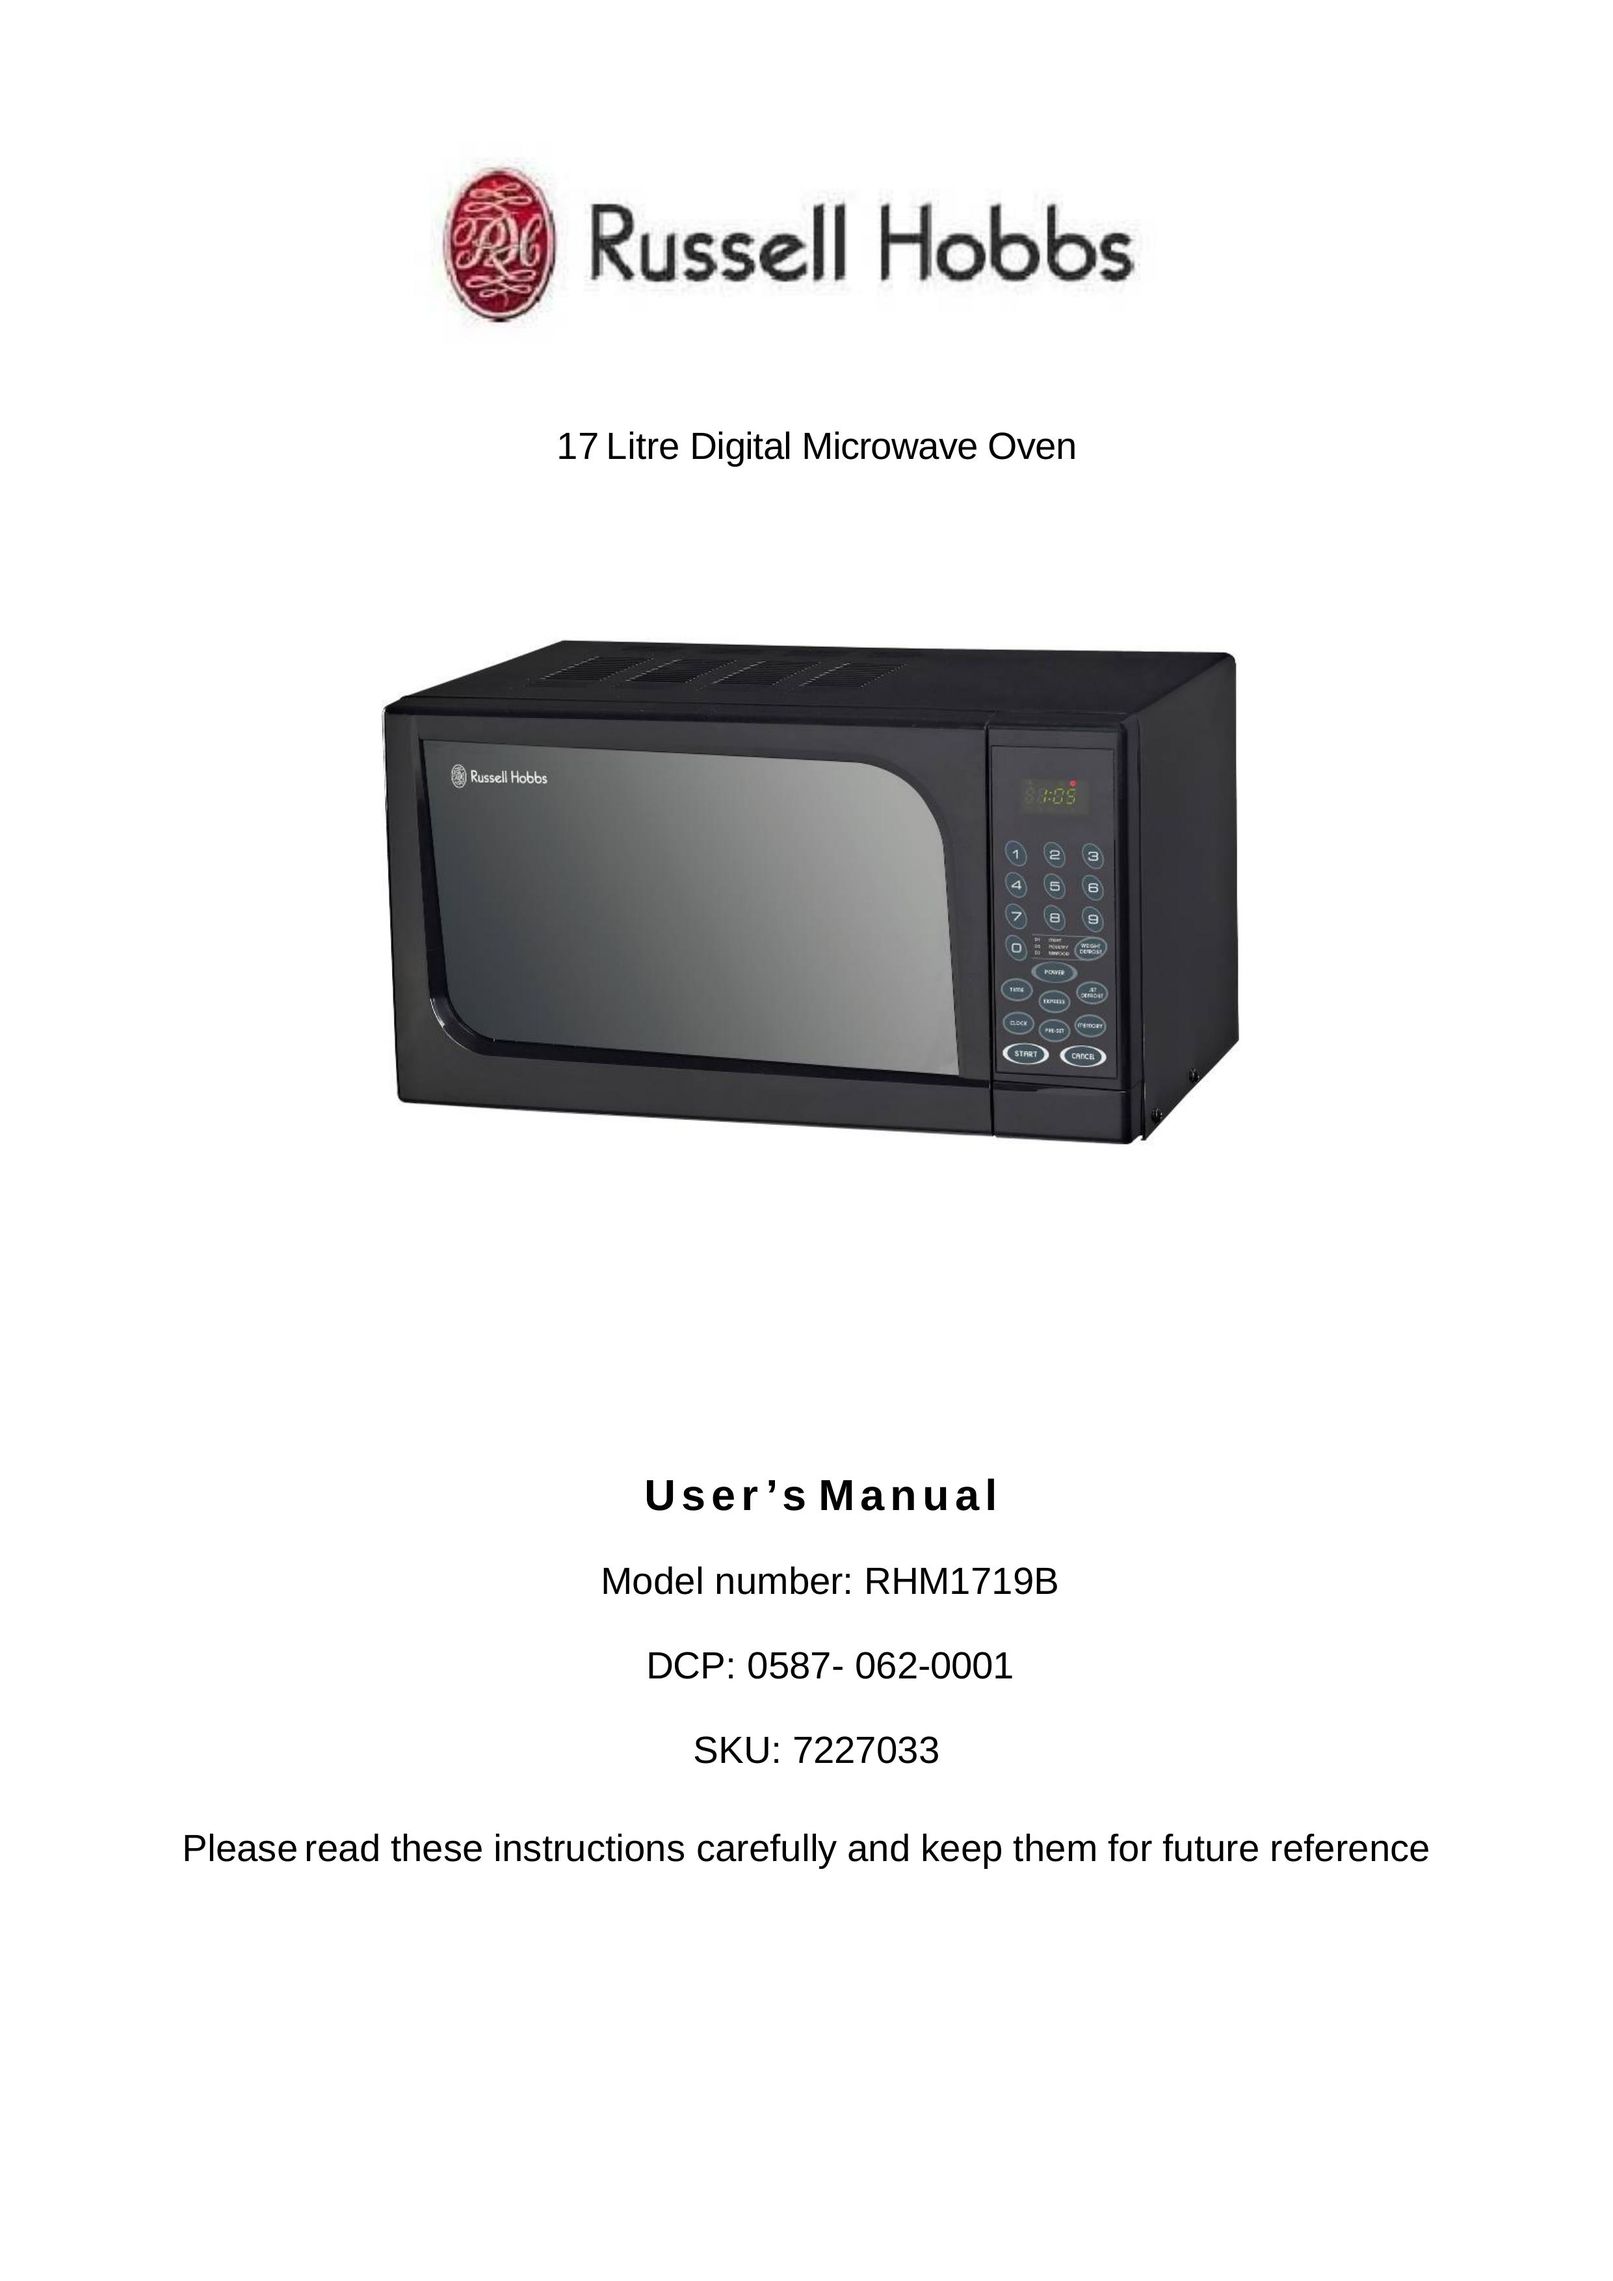 Russell Hobbs RHM1719B Microwave Oven User Manual